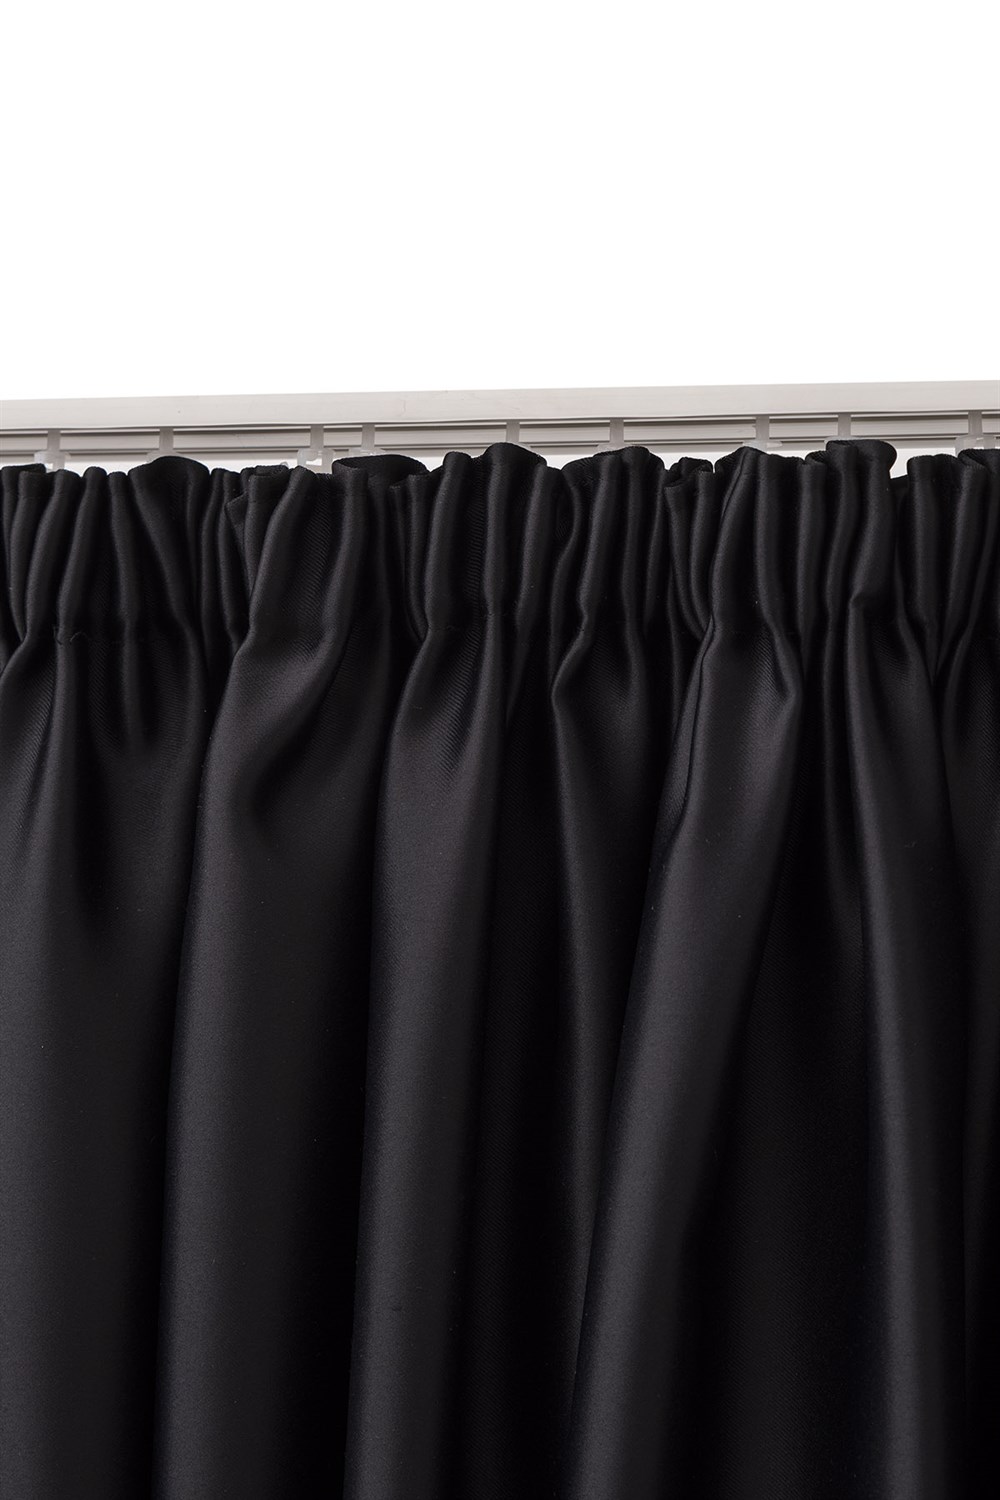 PERDELIQUE Black Thermal Blackout Curtain 100% Full Light Blocking Drapes  Natural Blackout, Multiple Functions, Unique Home Decor, Easy Care. |  C&Sari Design